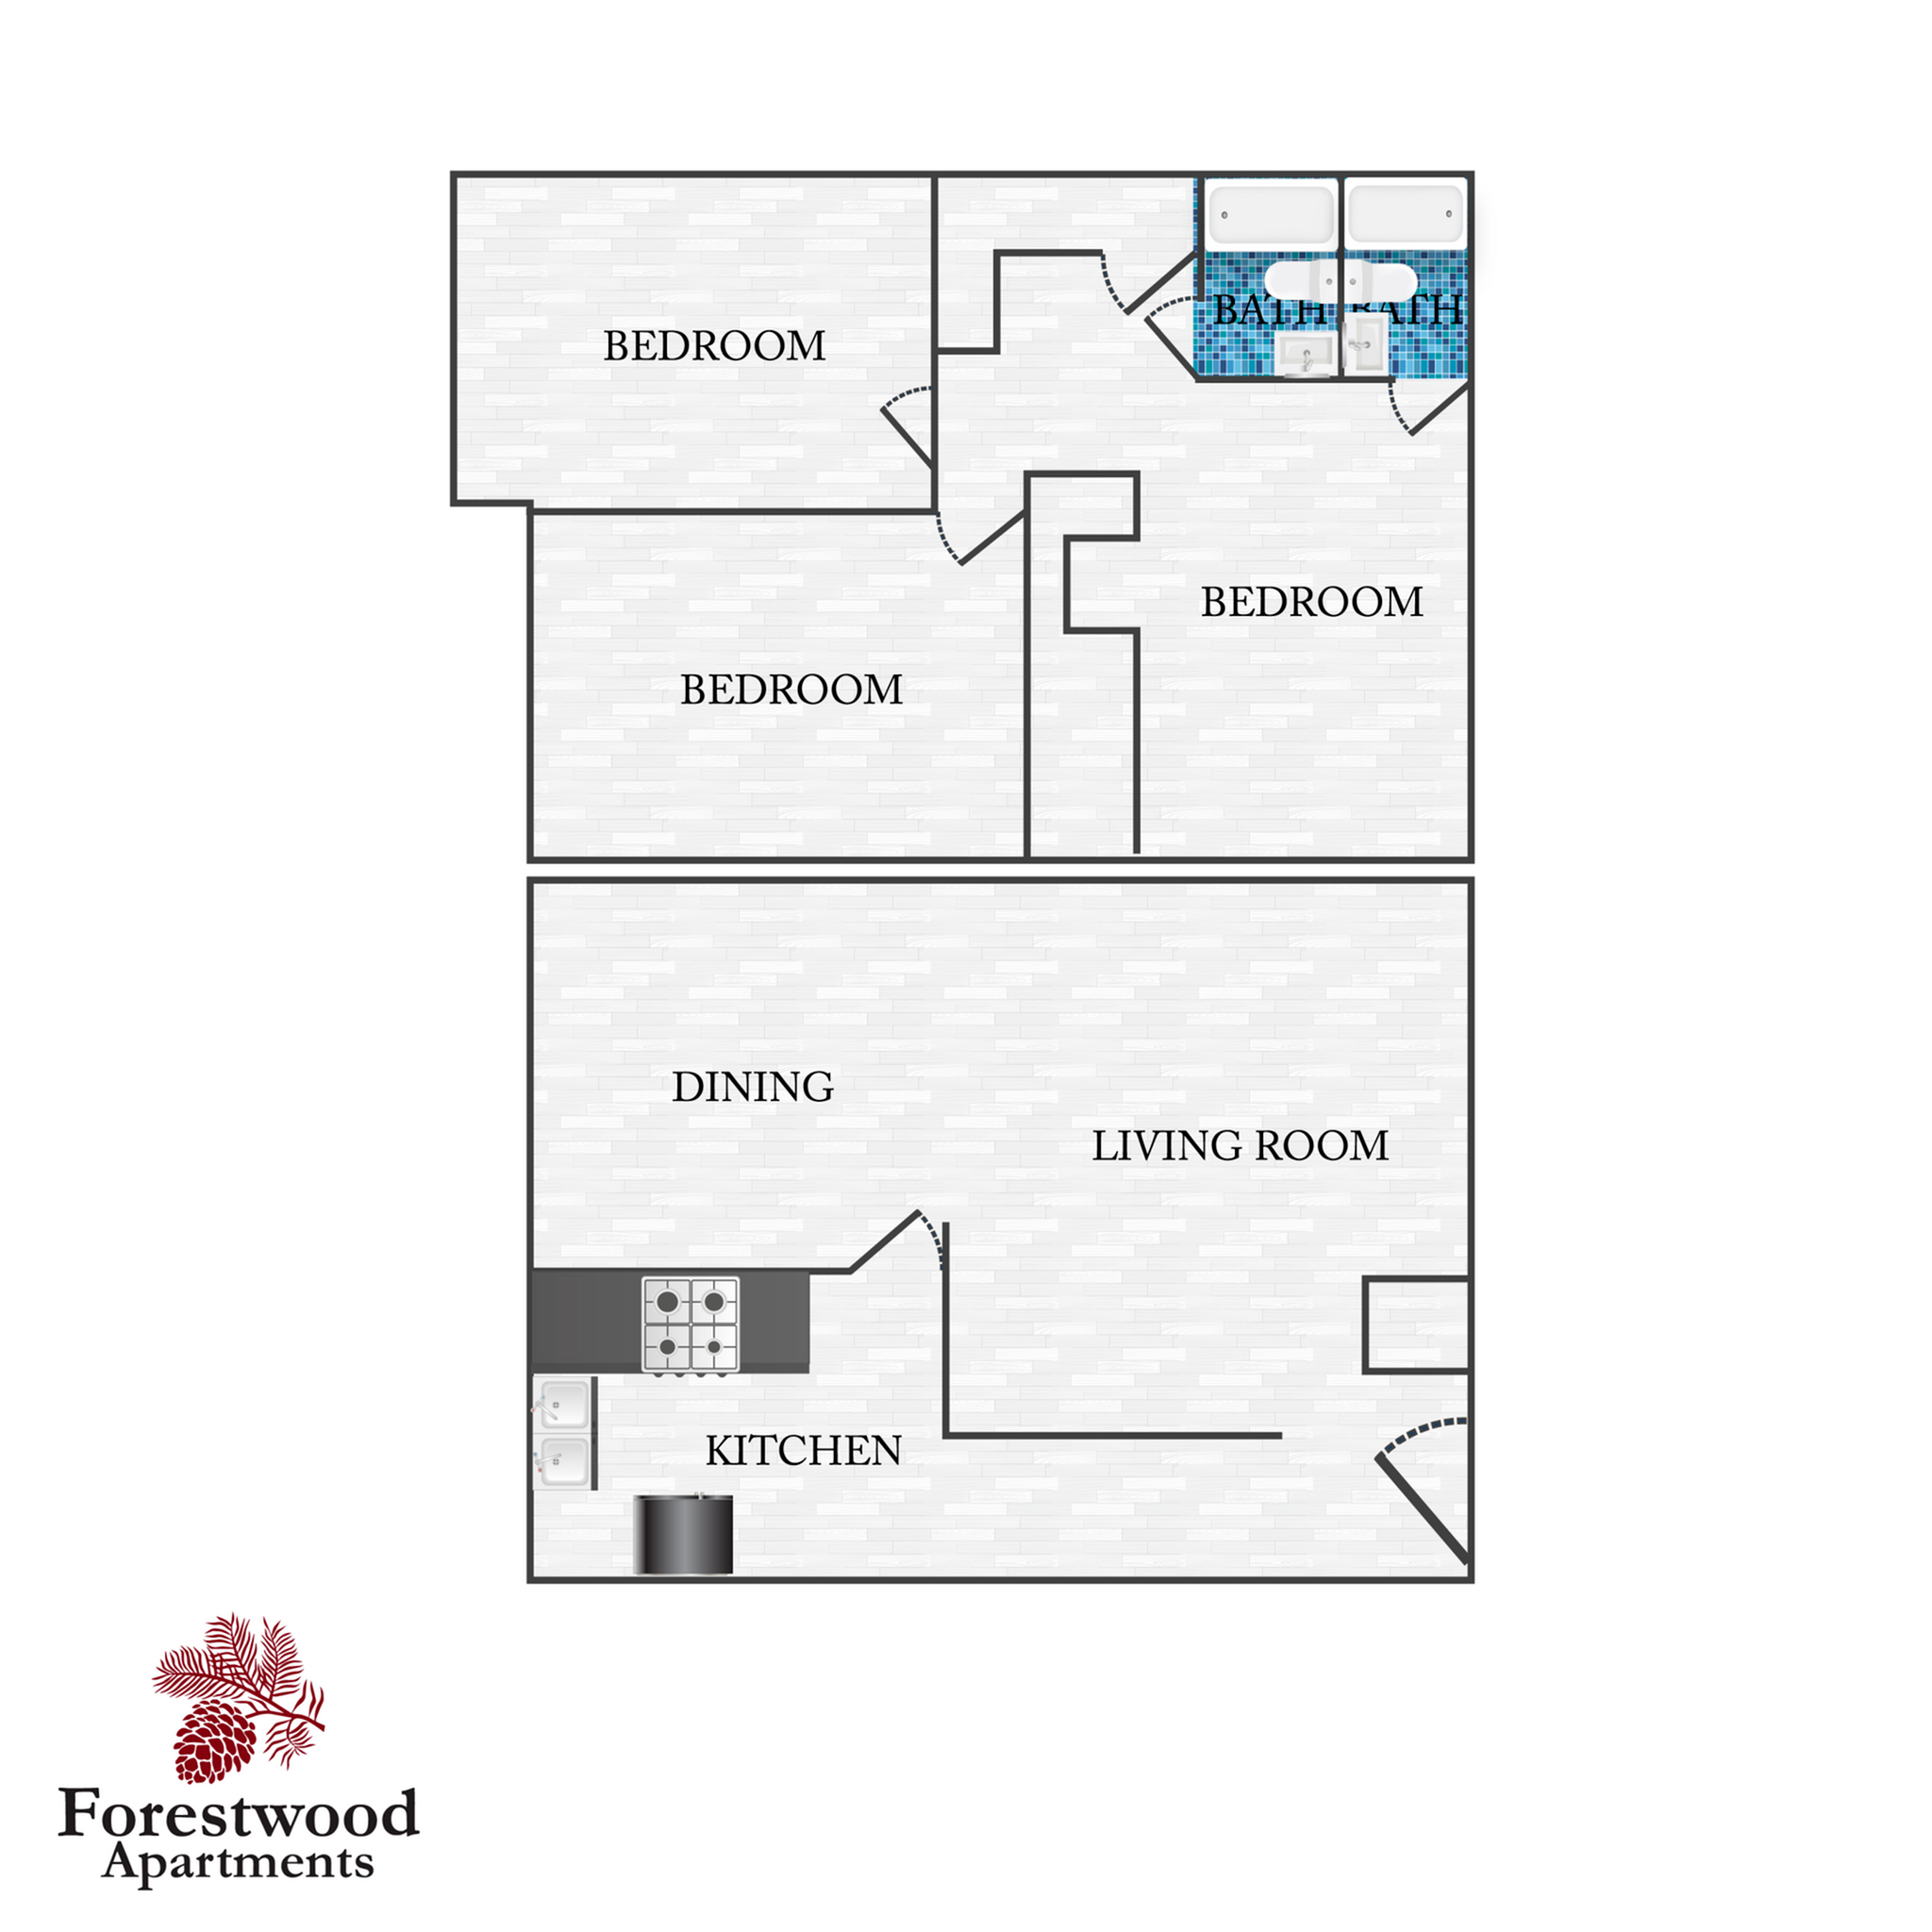 3 bedroom floorplan at forestwood